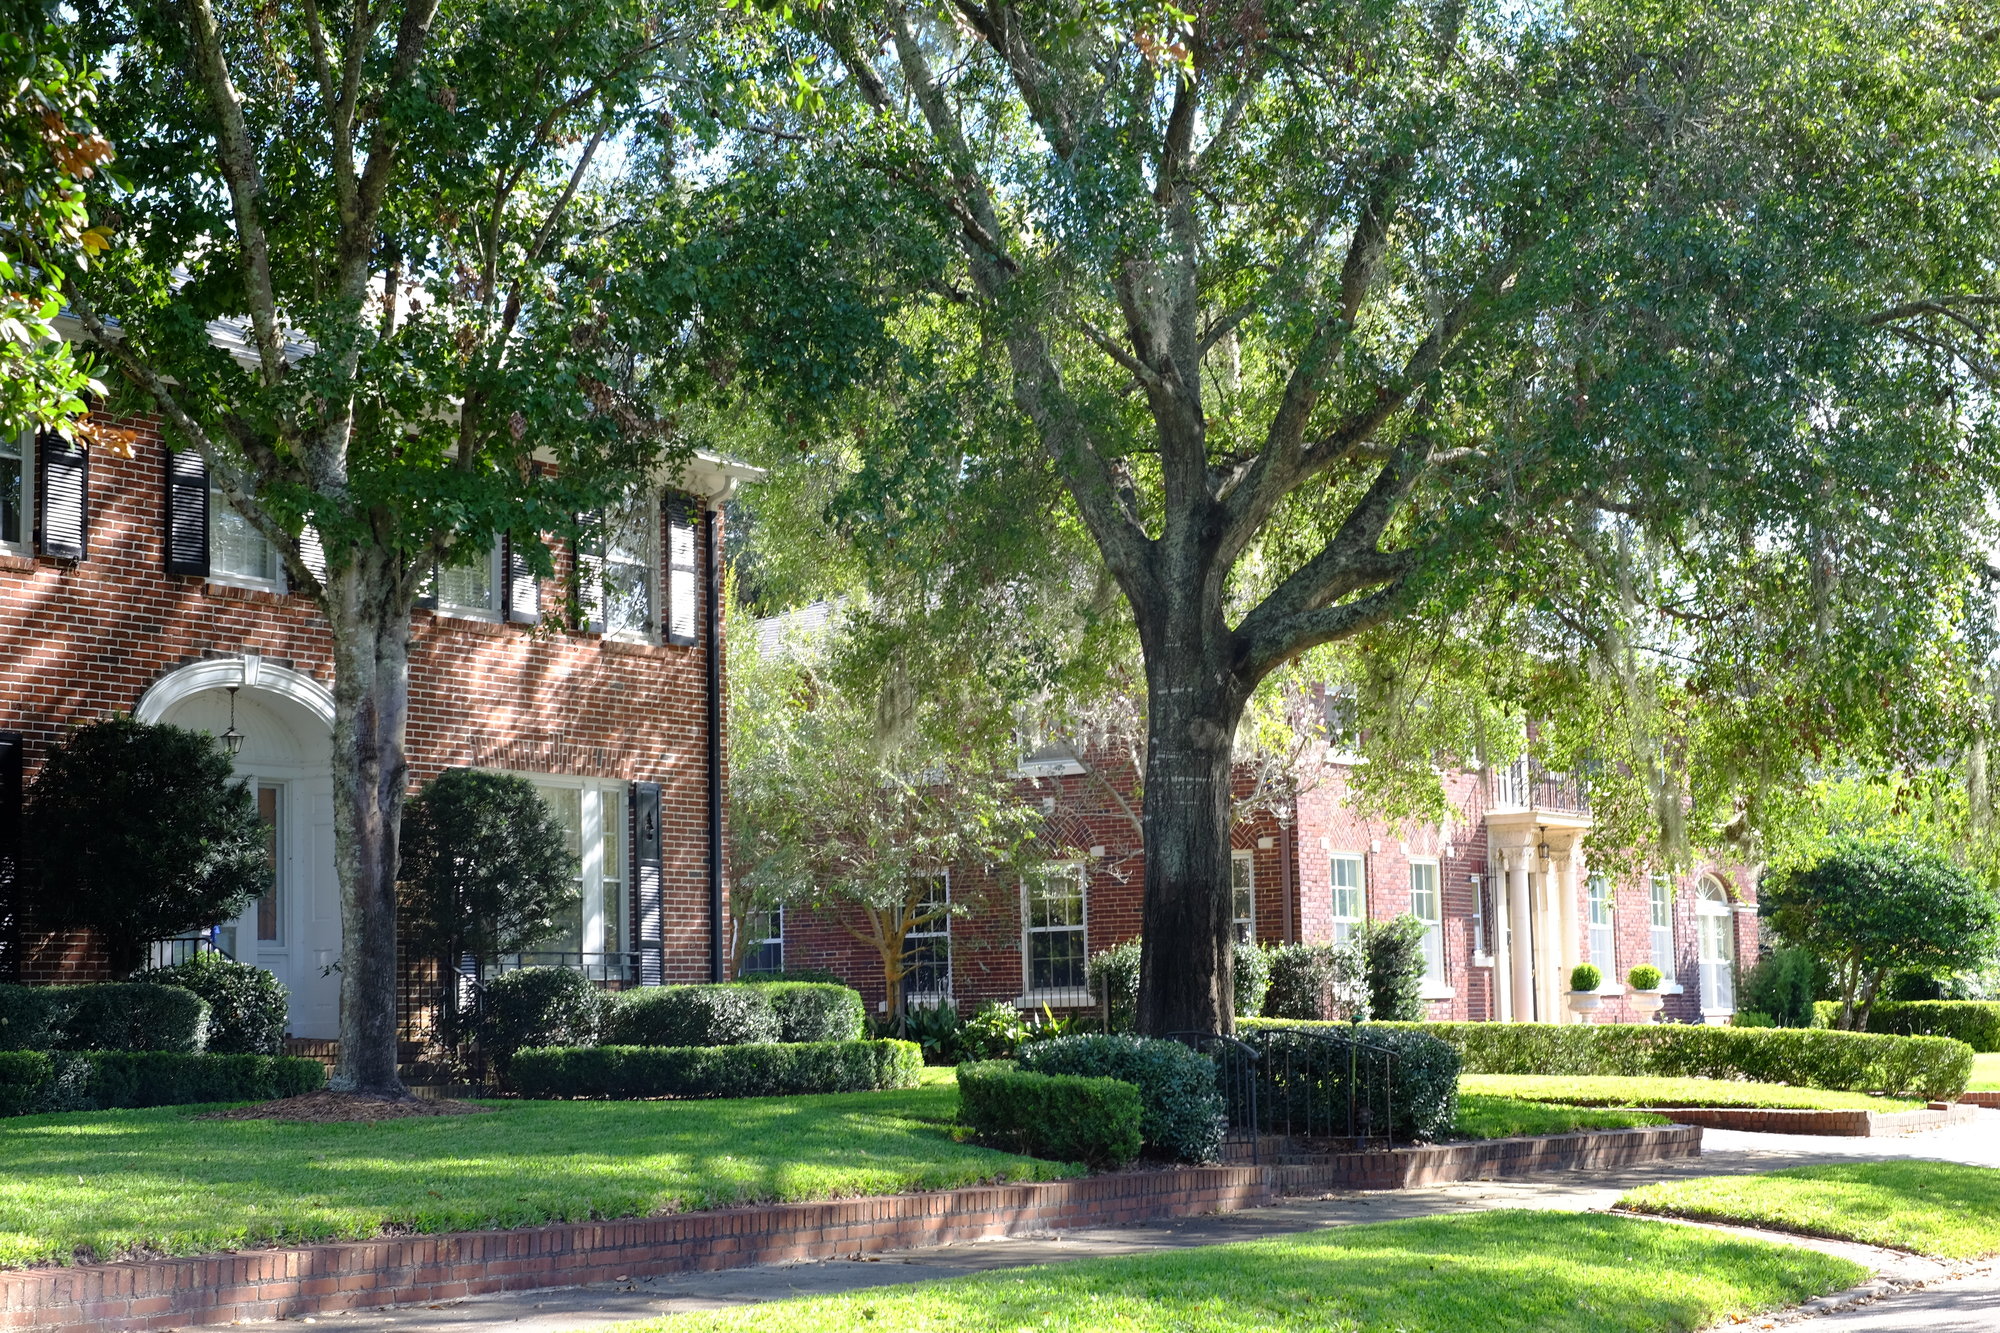 Historic homes and tree lined sidewalks in Avondale Jacksonville